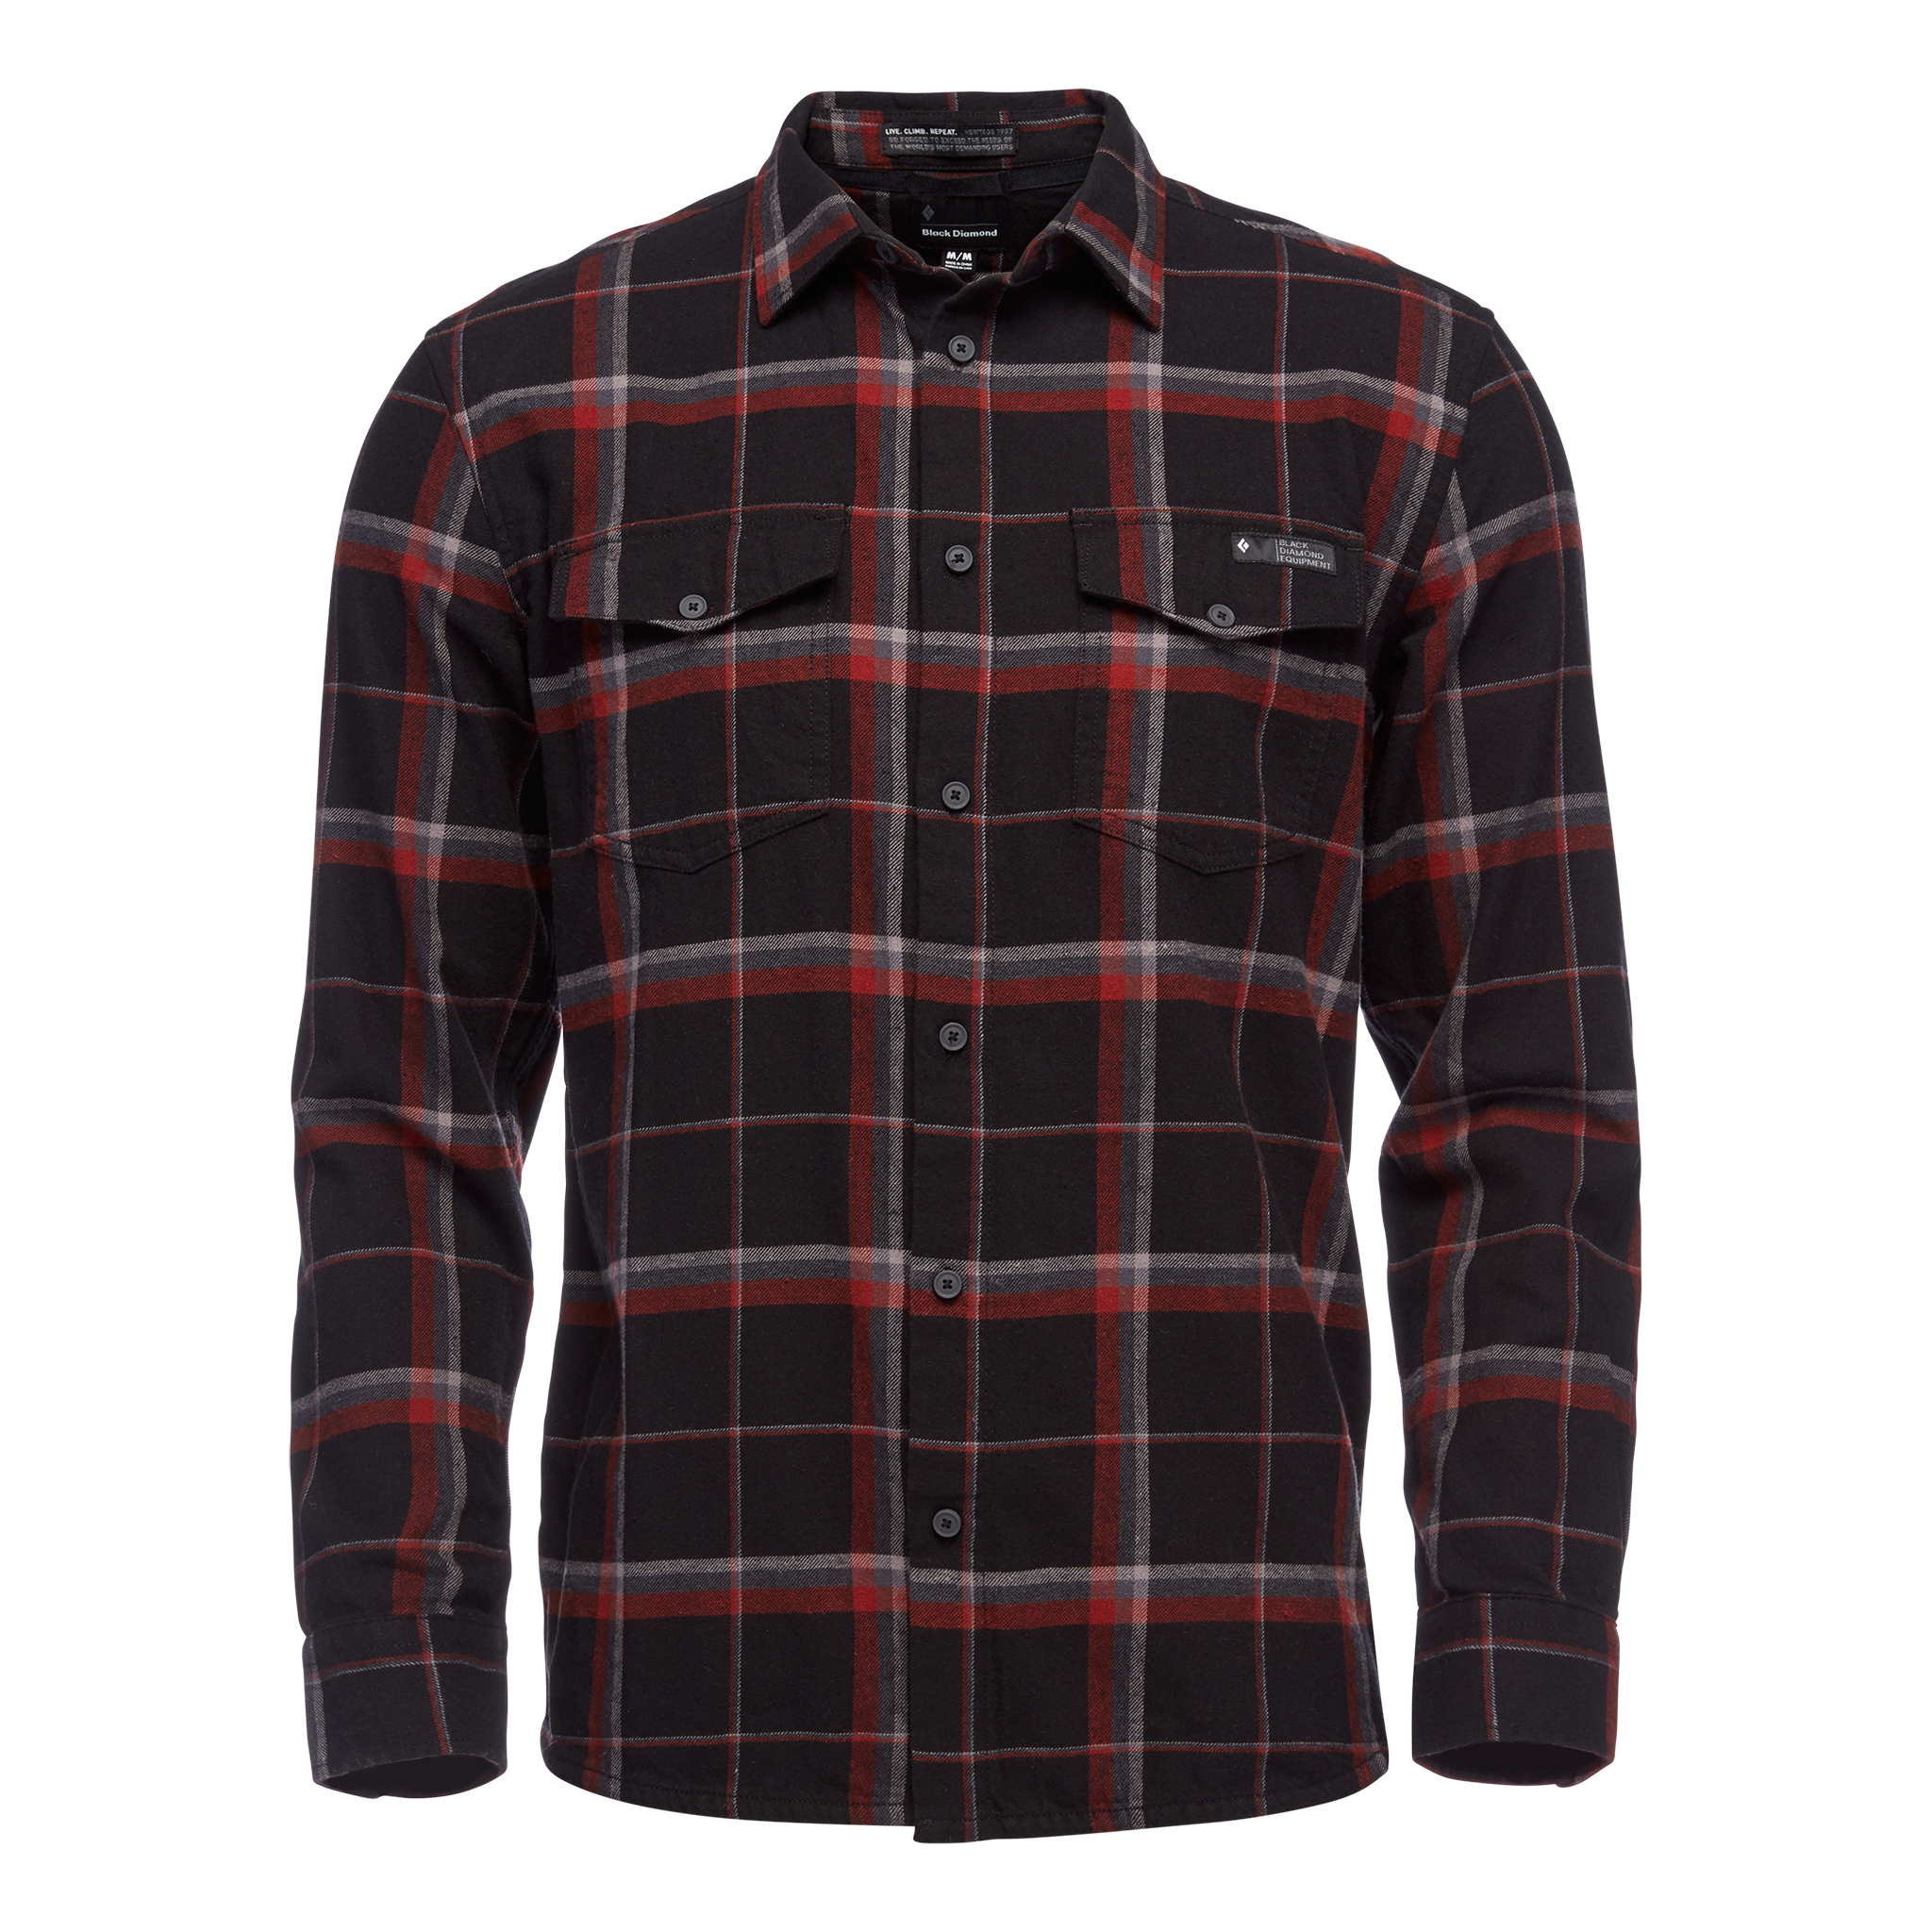 Black Diamond Equipment Men's Valley Flannel Shirt, Large Black/Nickel/Plaid